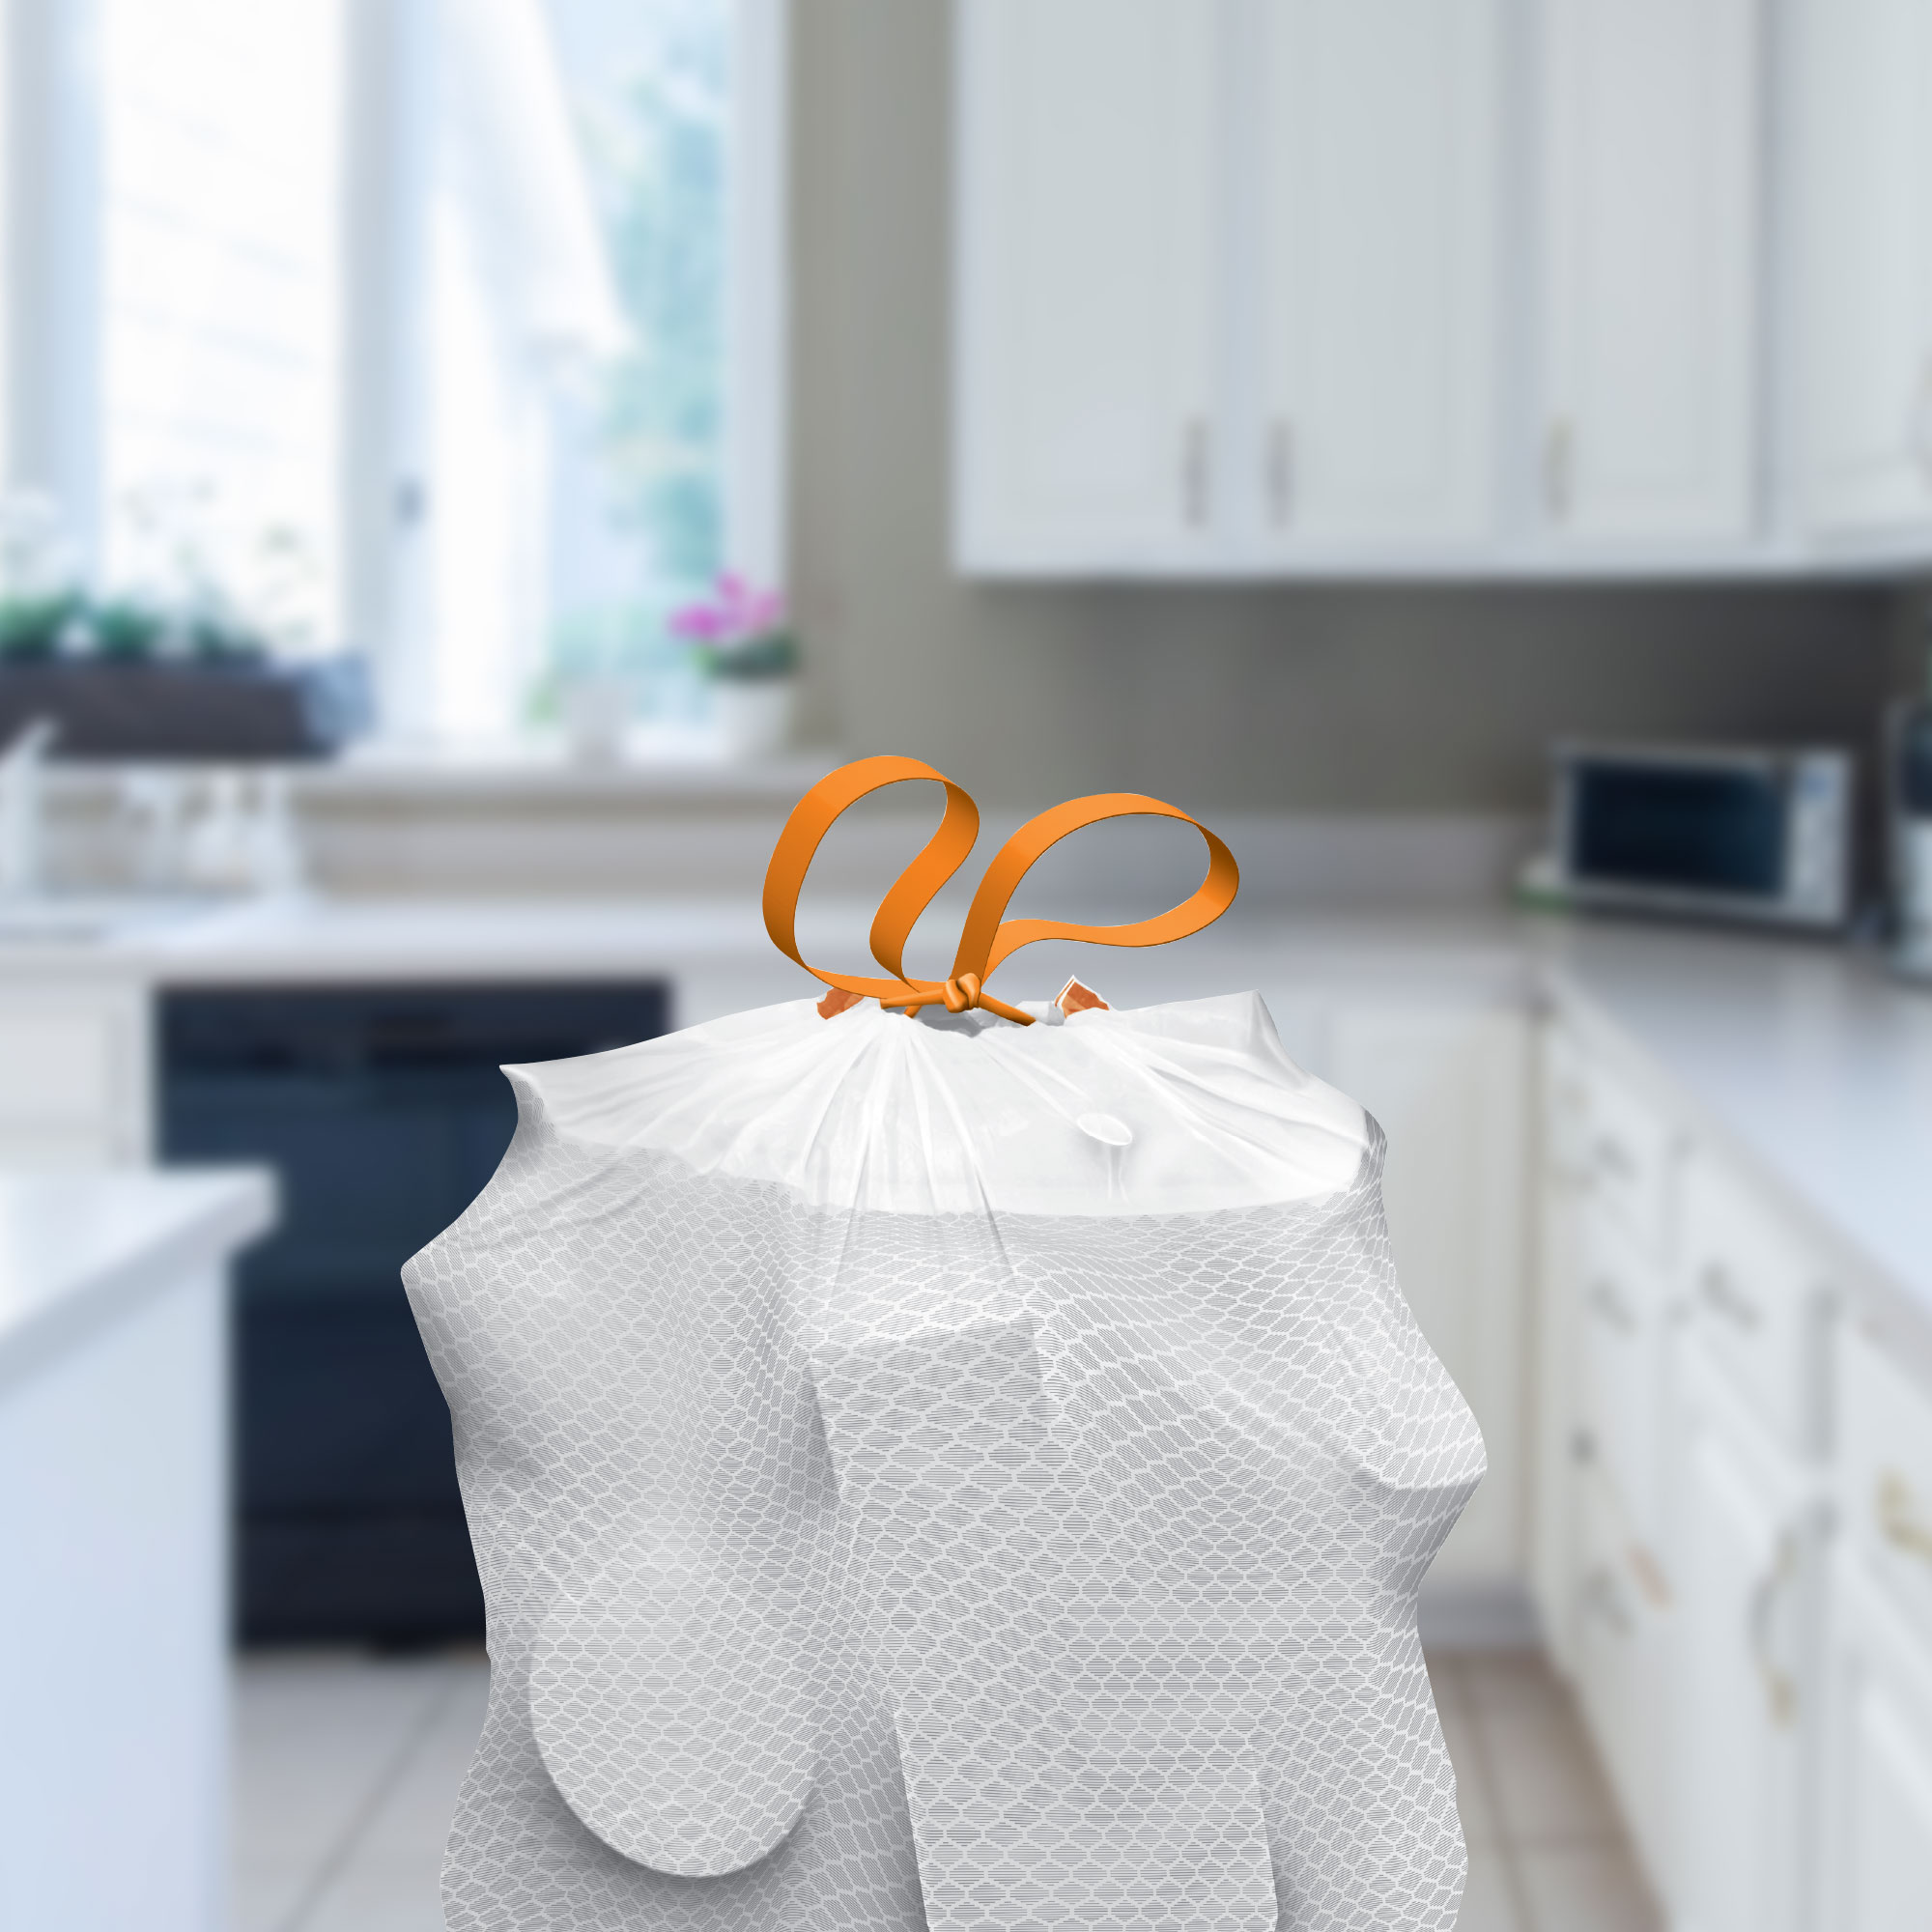 MOXIE 13-Gallons White Plastic Kitchen Drawstring Trash Bag (180-Count)